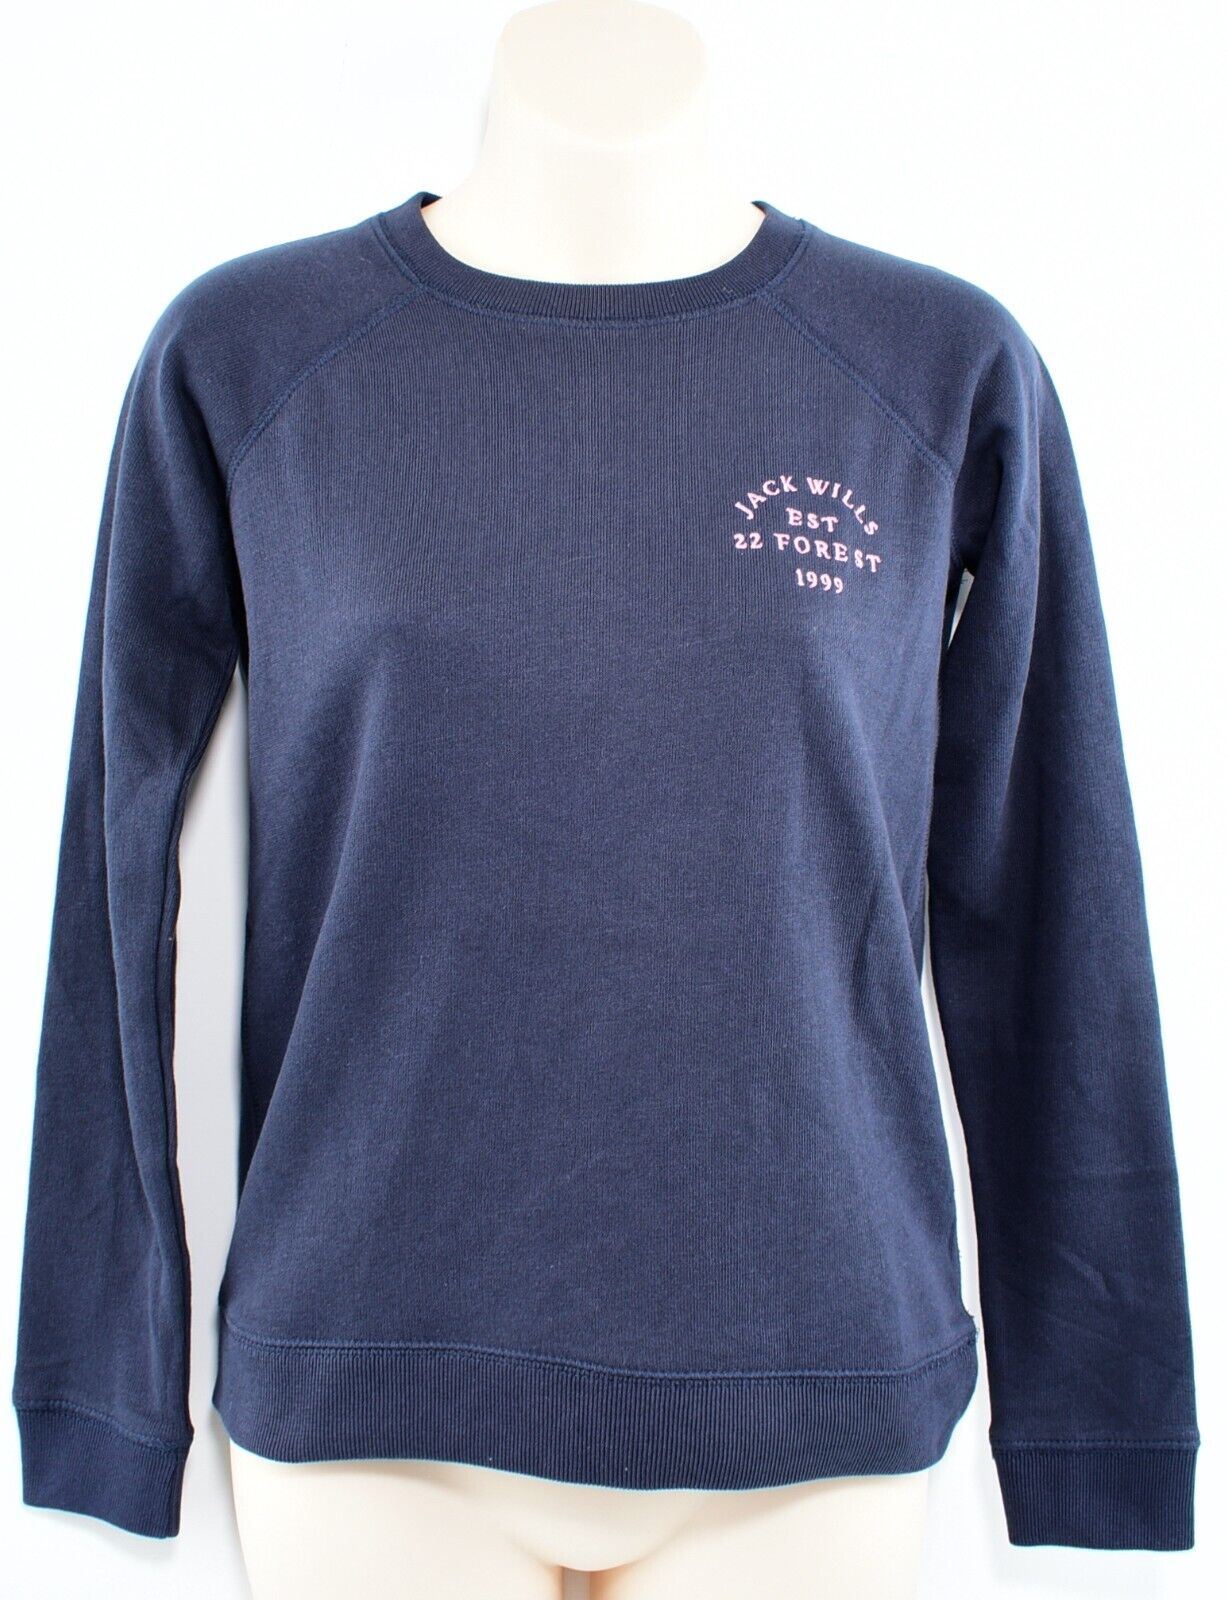 JACK WILLS Womens COLBY Sweatshirt, Navy Blue, size 2XS /UK 6